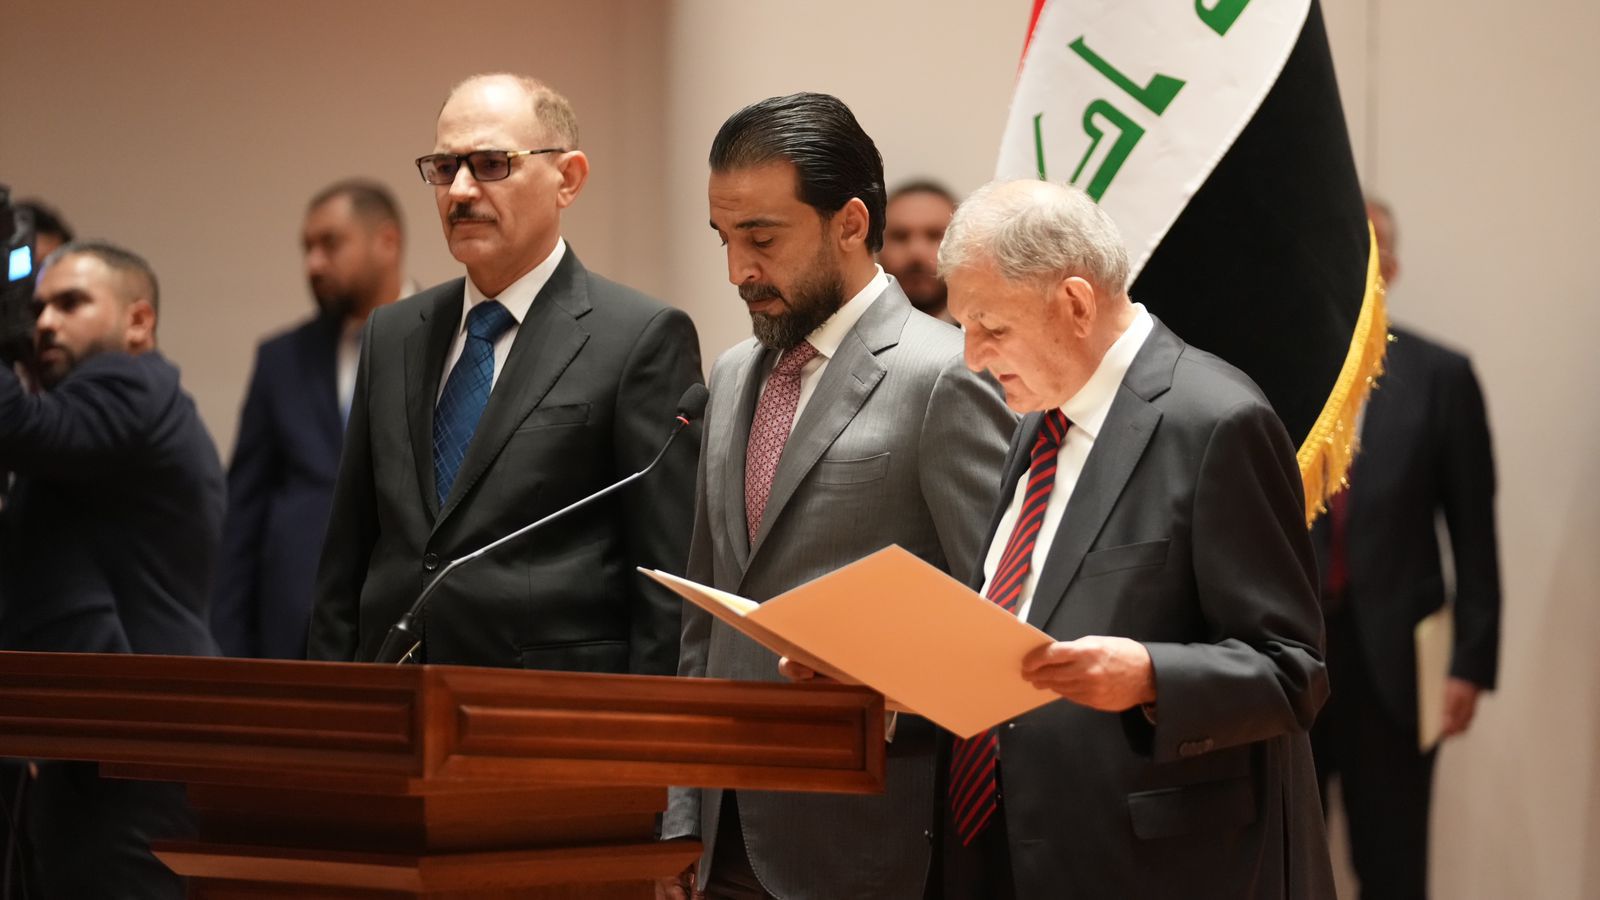 Plasschaert congratulates al-Sudani on his appointment as PM 